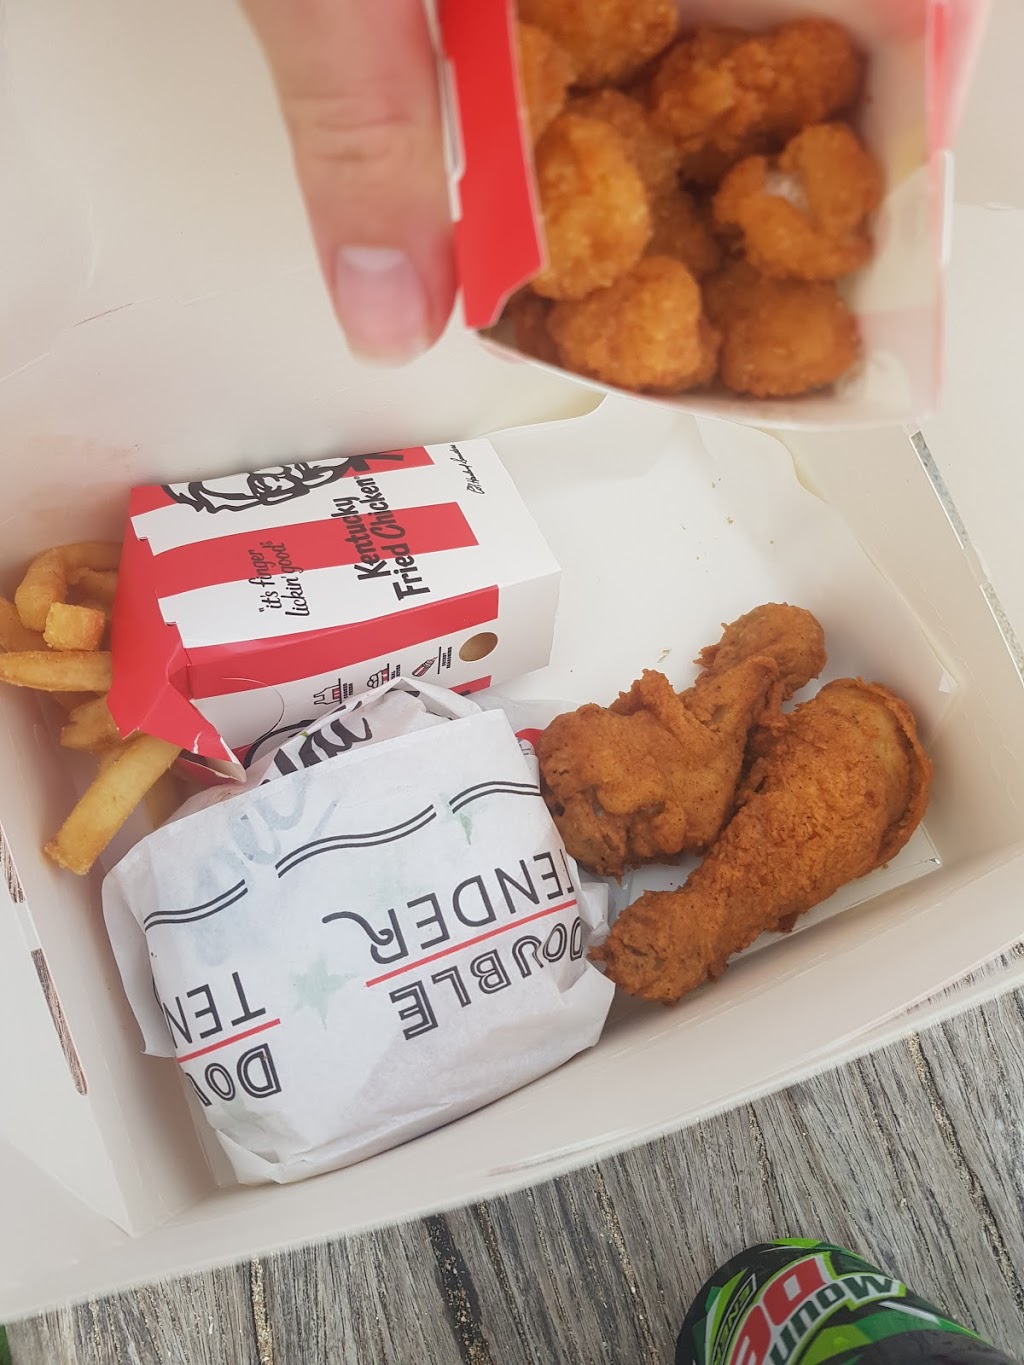 KFC Sans Souci | meal takeaway | 494 Rocky Point Rd, Sans Souci NSW 2219, Australia | 0295297095 OR +61 2 9529 7095